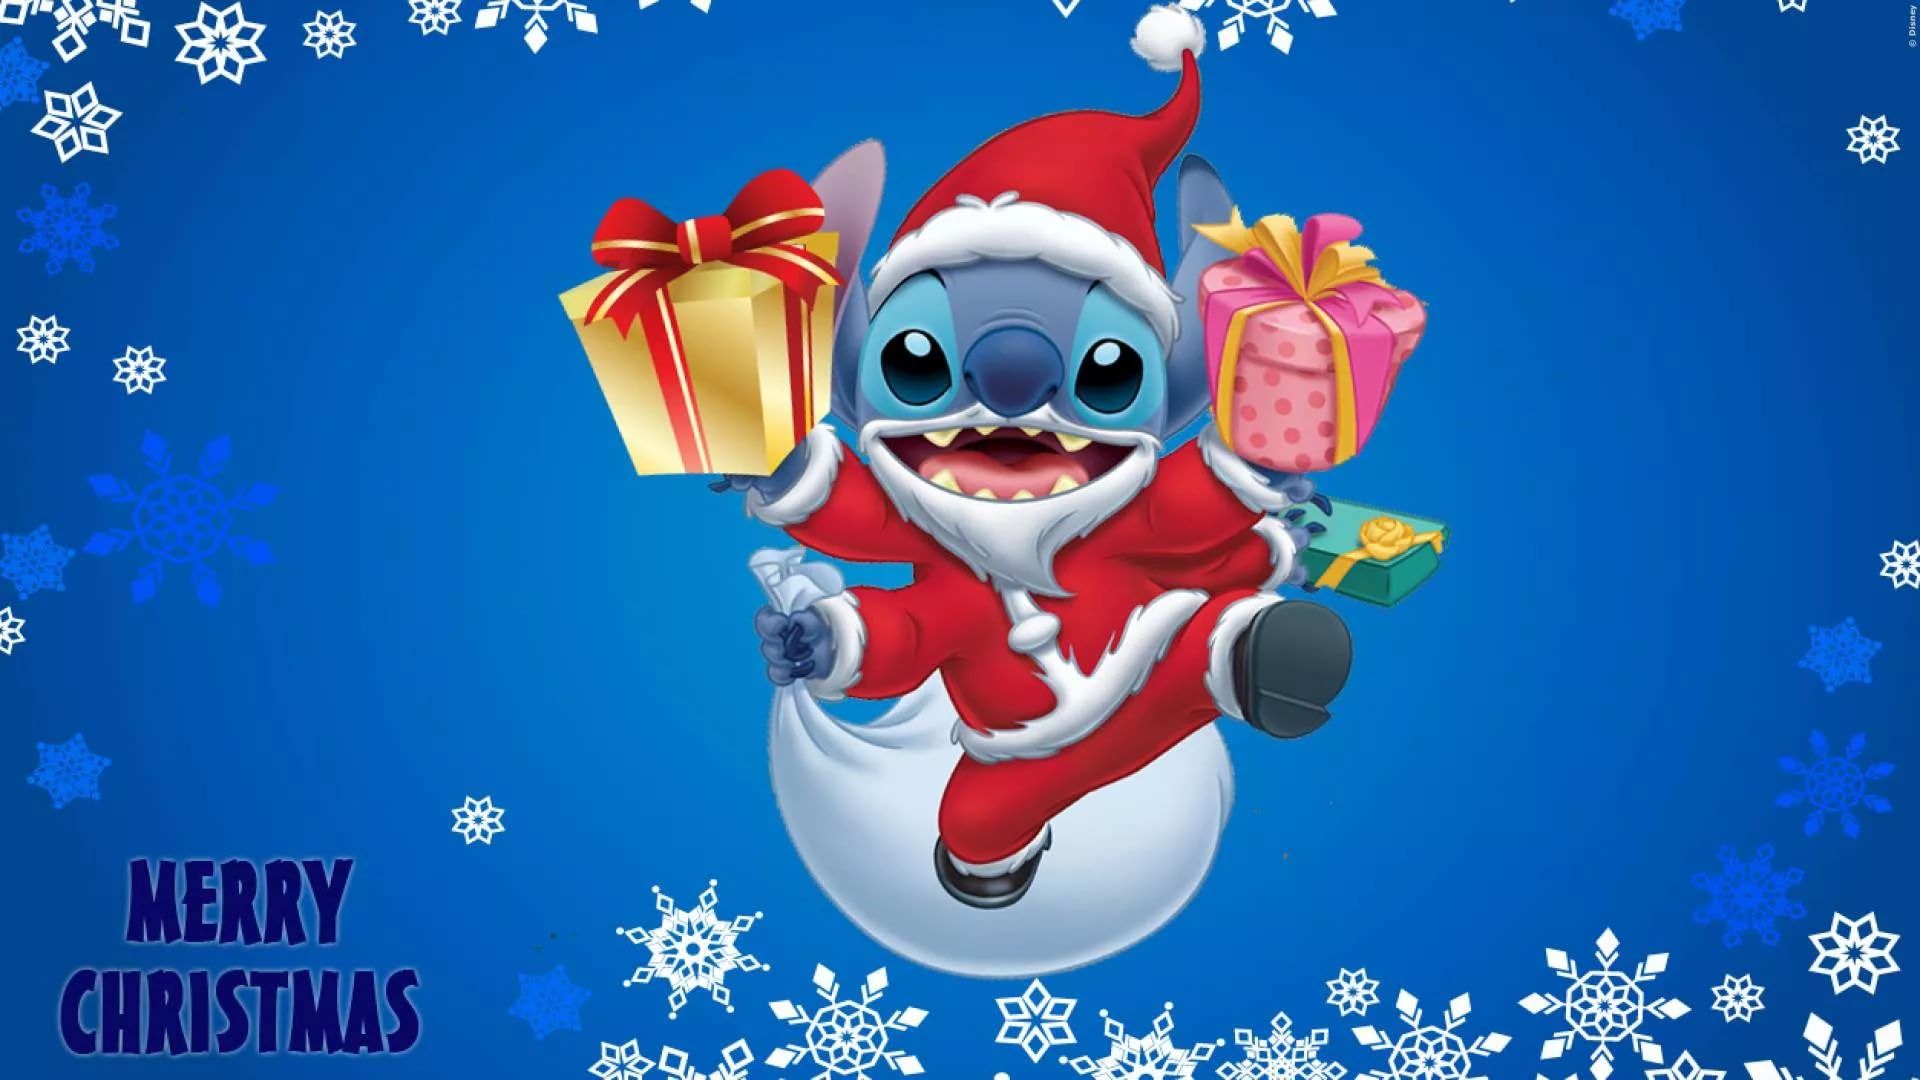 Disney Christmas HD Wallpaper: Image